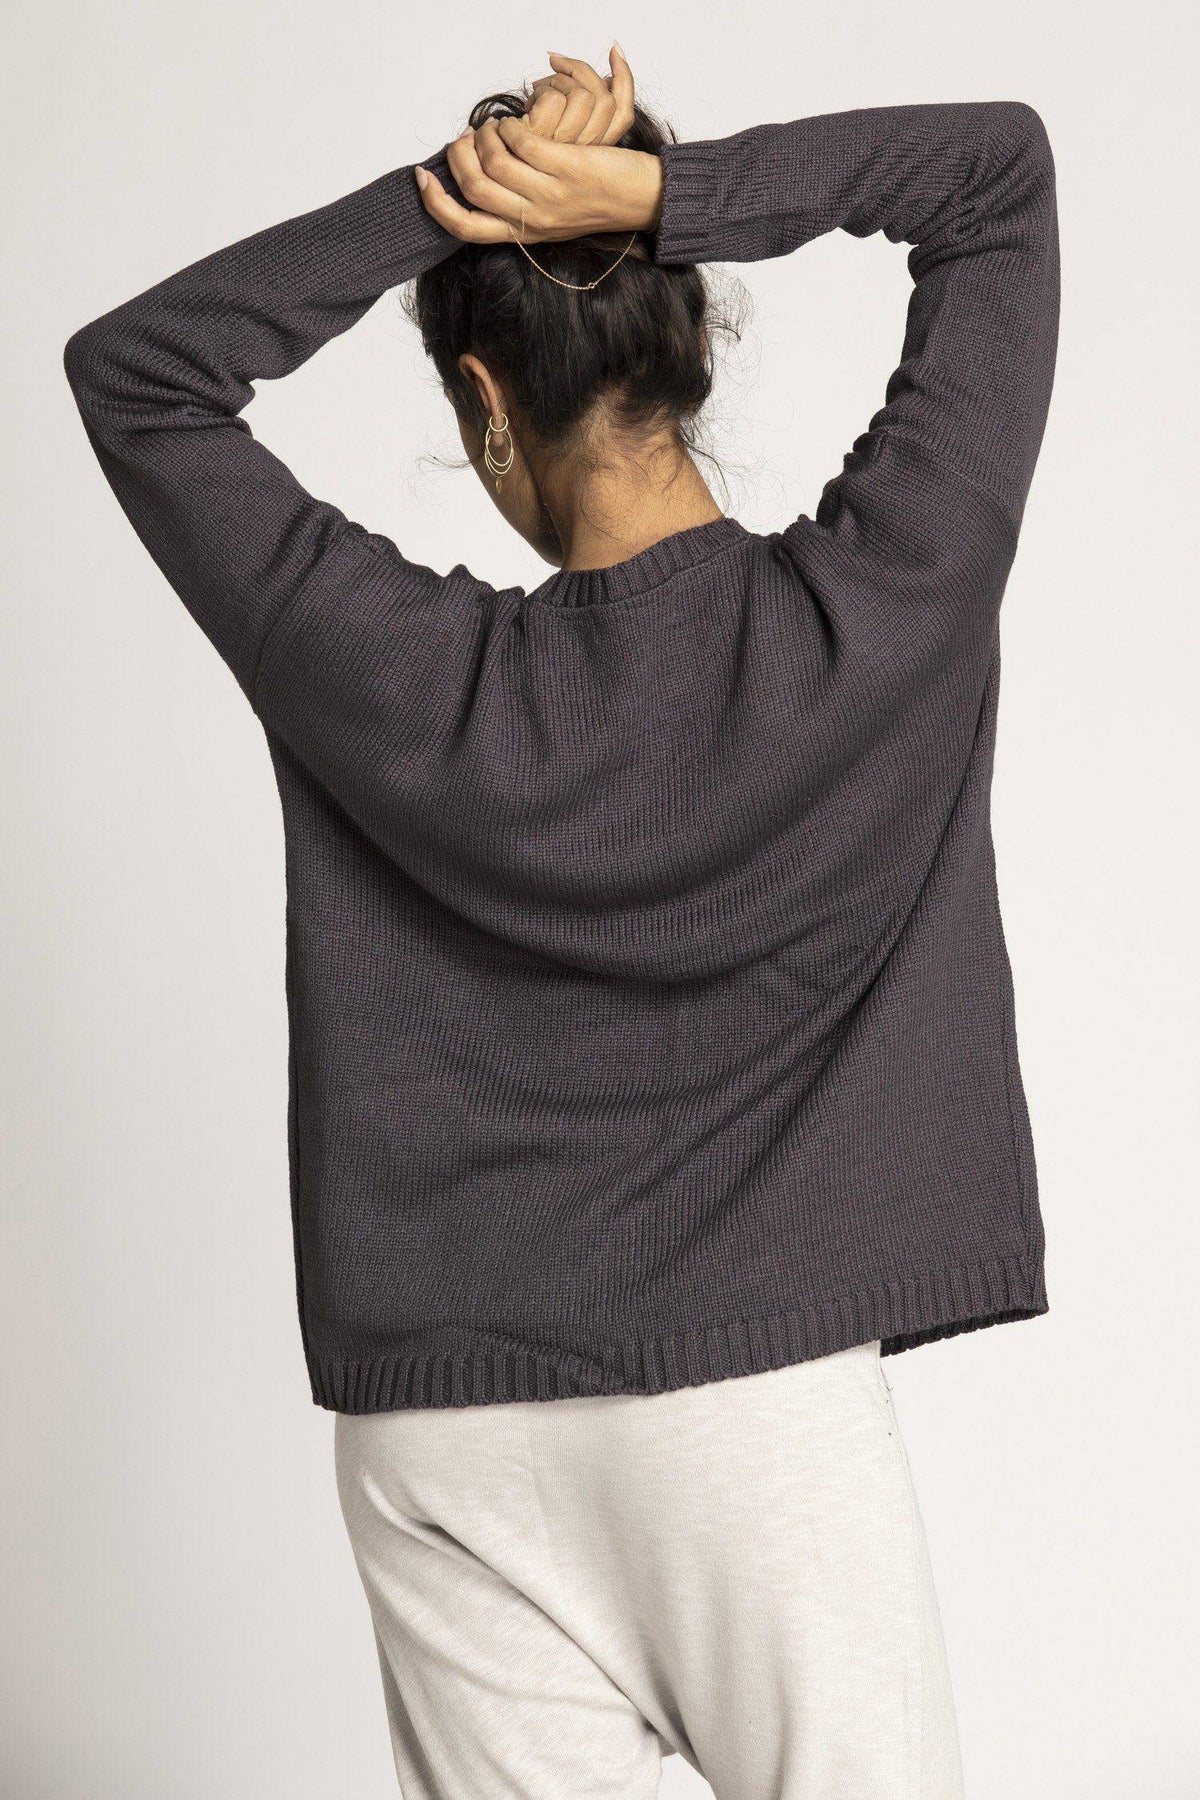 Knitted Braided Box Sweater - womens clothing - Ripple Yoga Wear